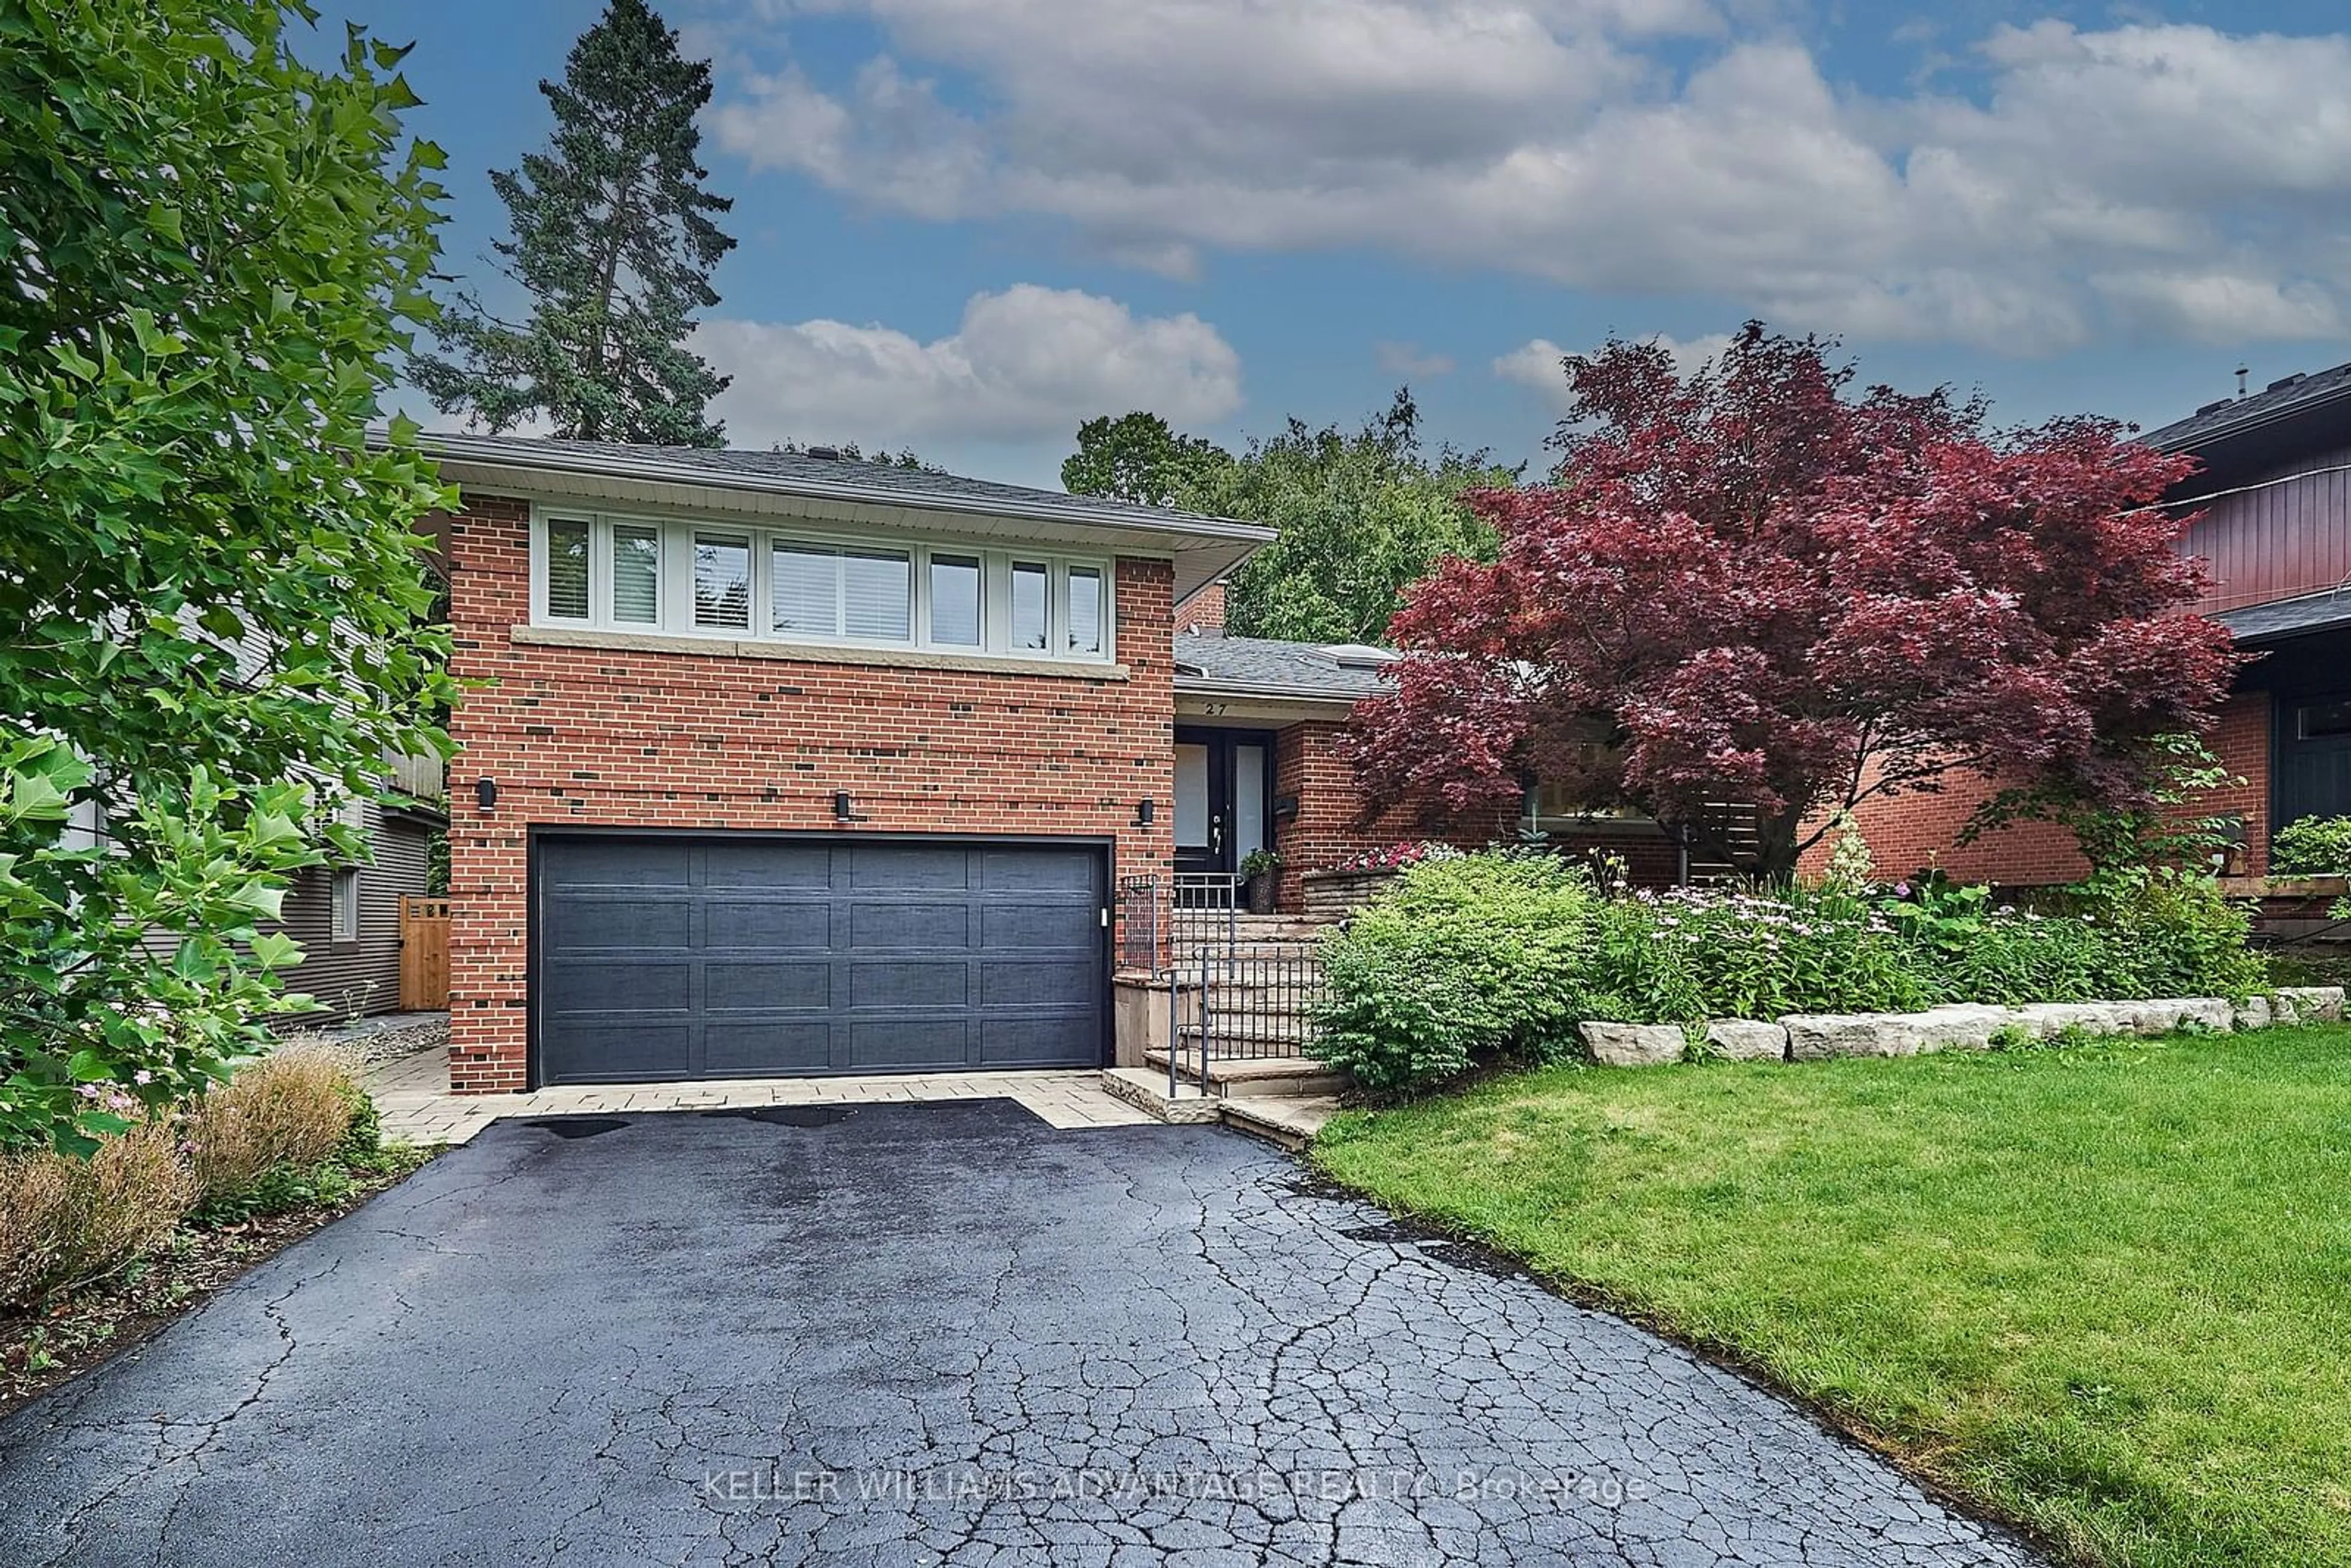 Home with brick exterior material for 27 Mcnab Blvd, Toronto Ontario M1M 2W4